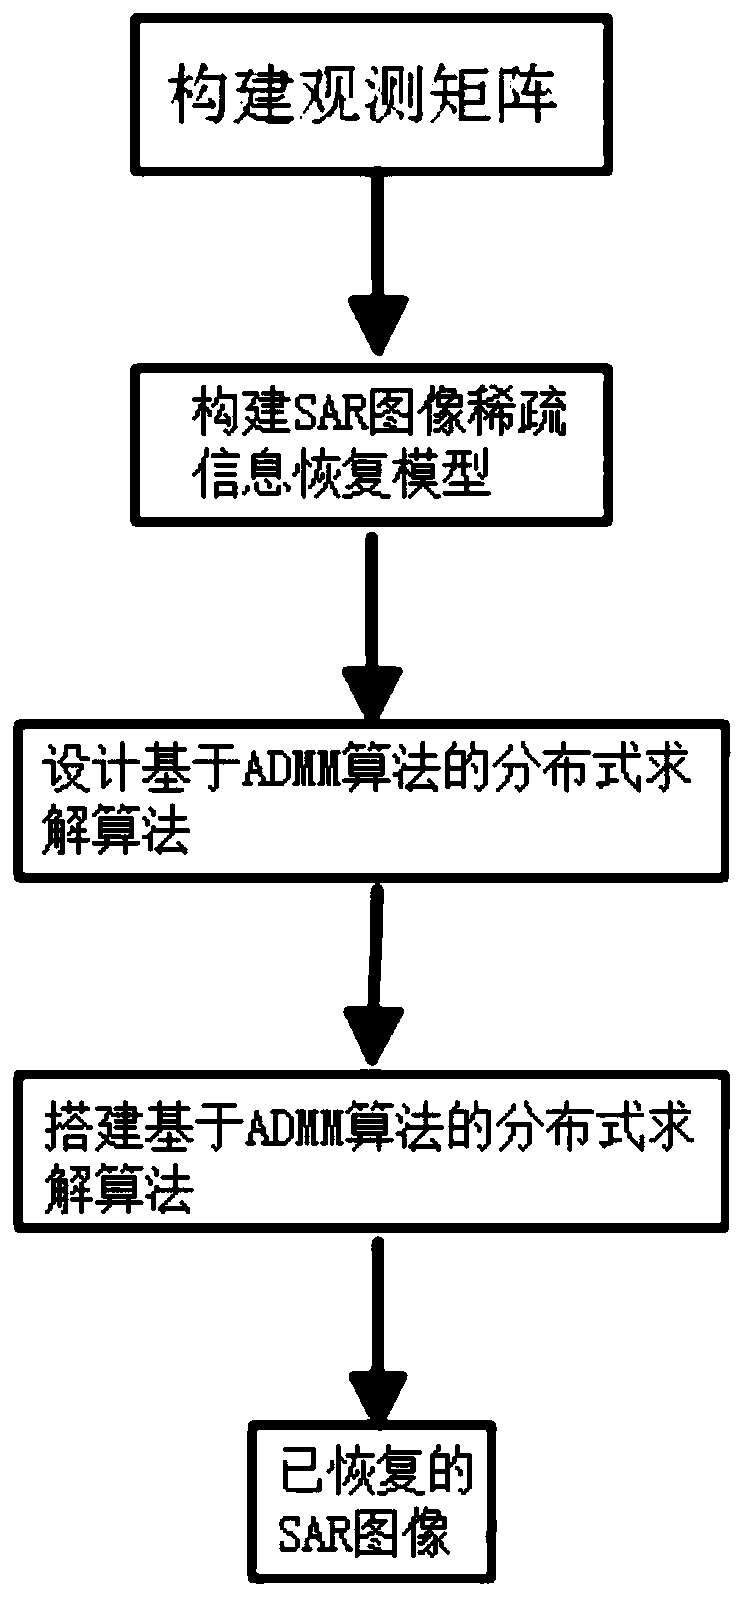 Distributed method for restoring SAR image based on ADMM